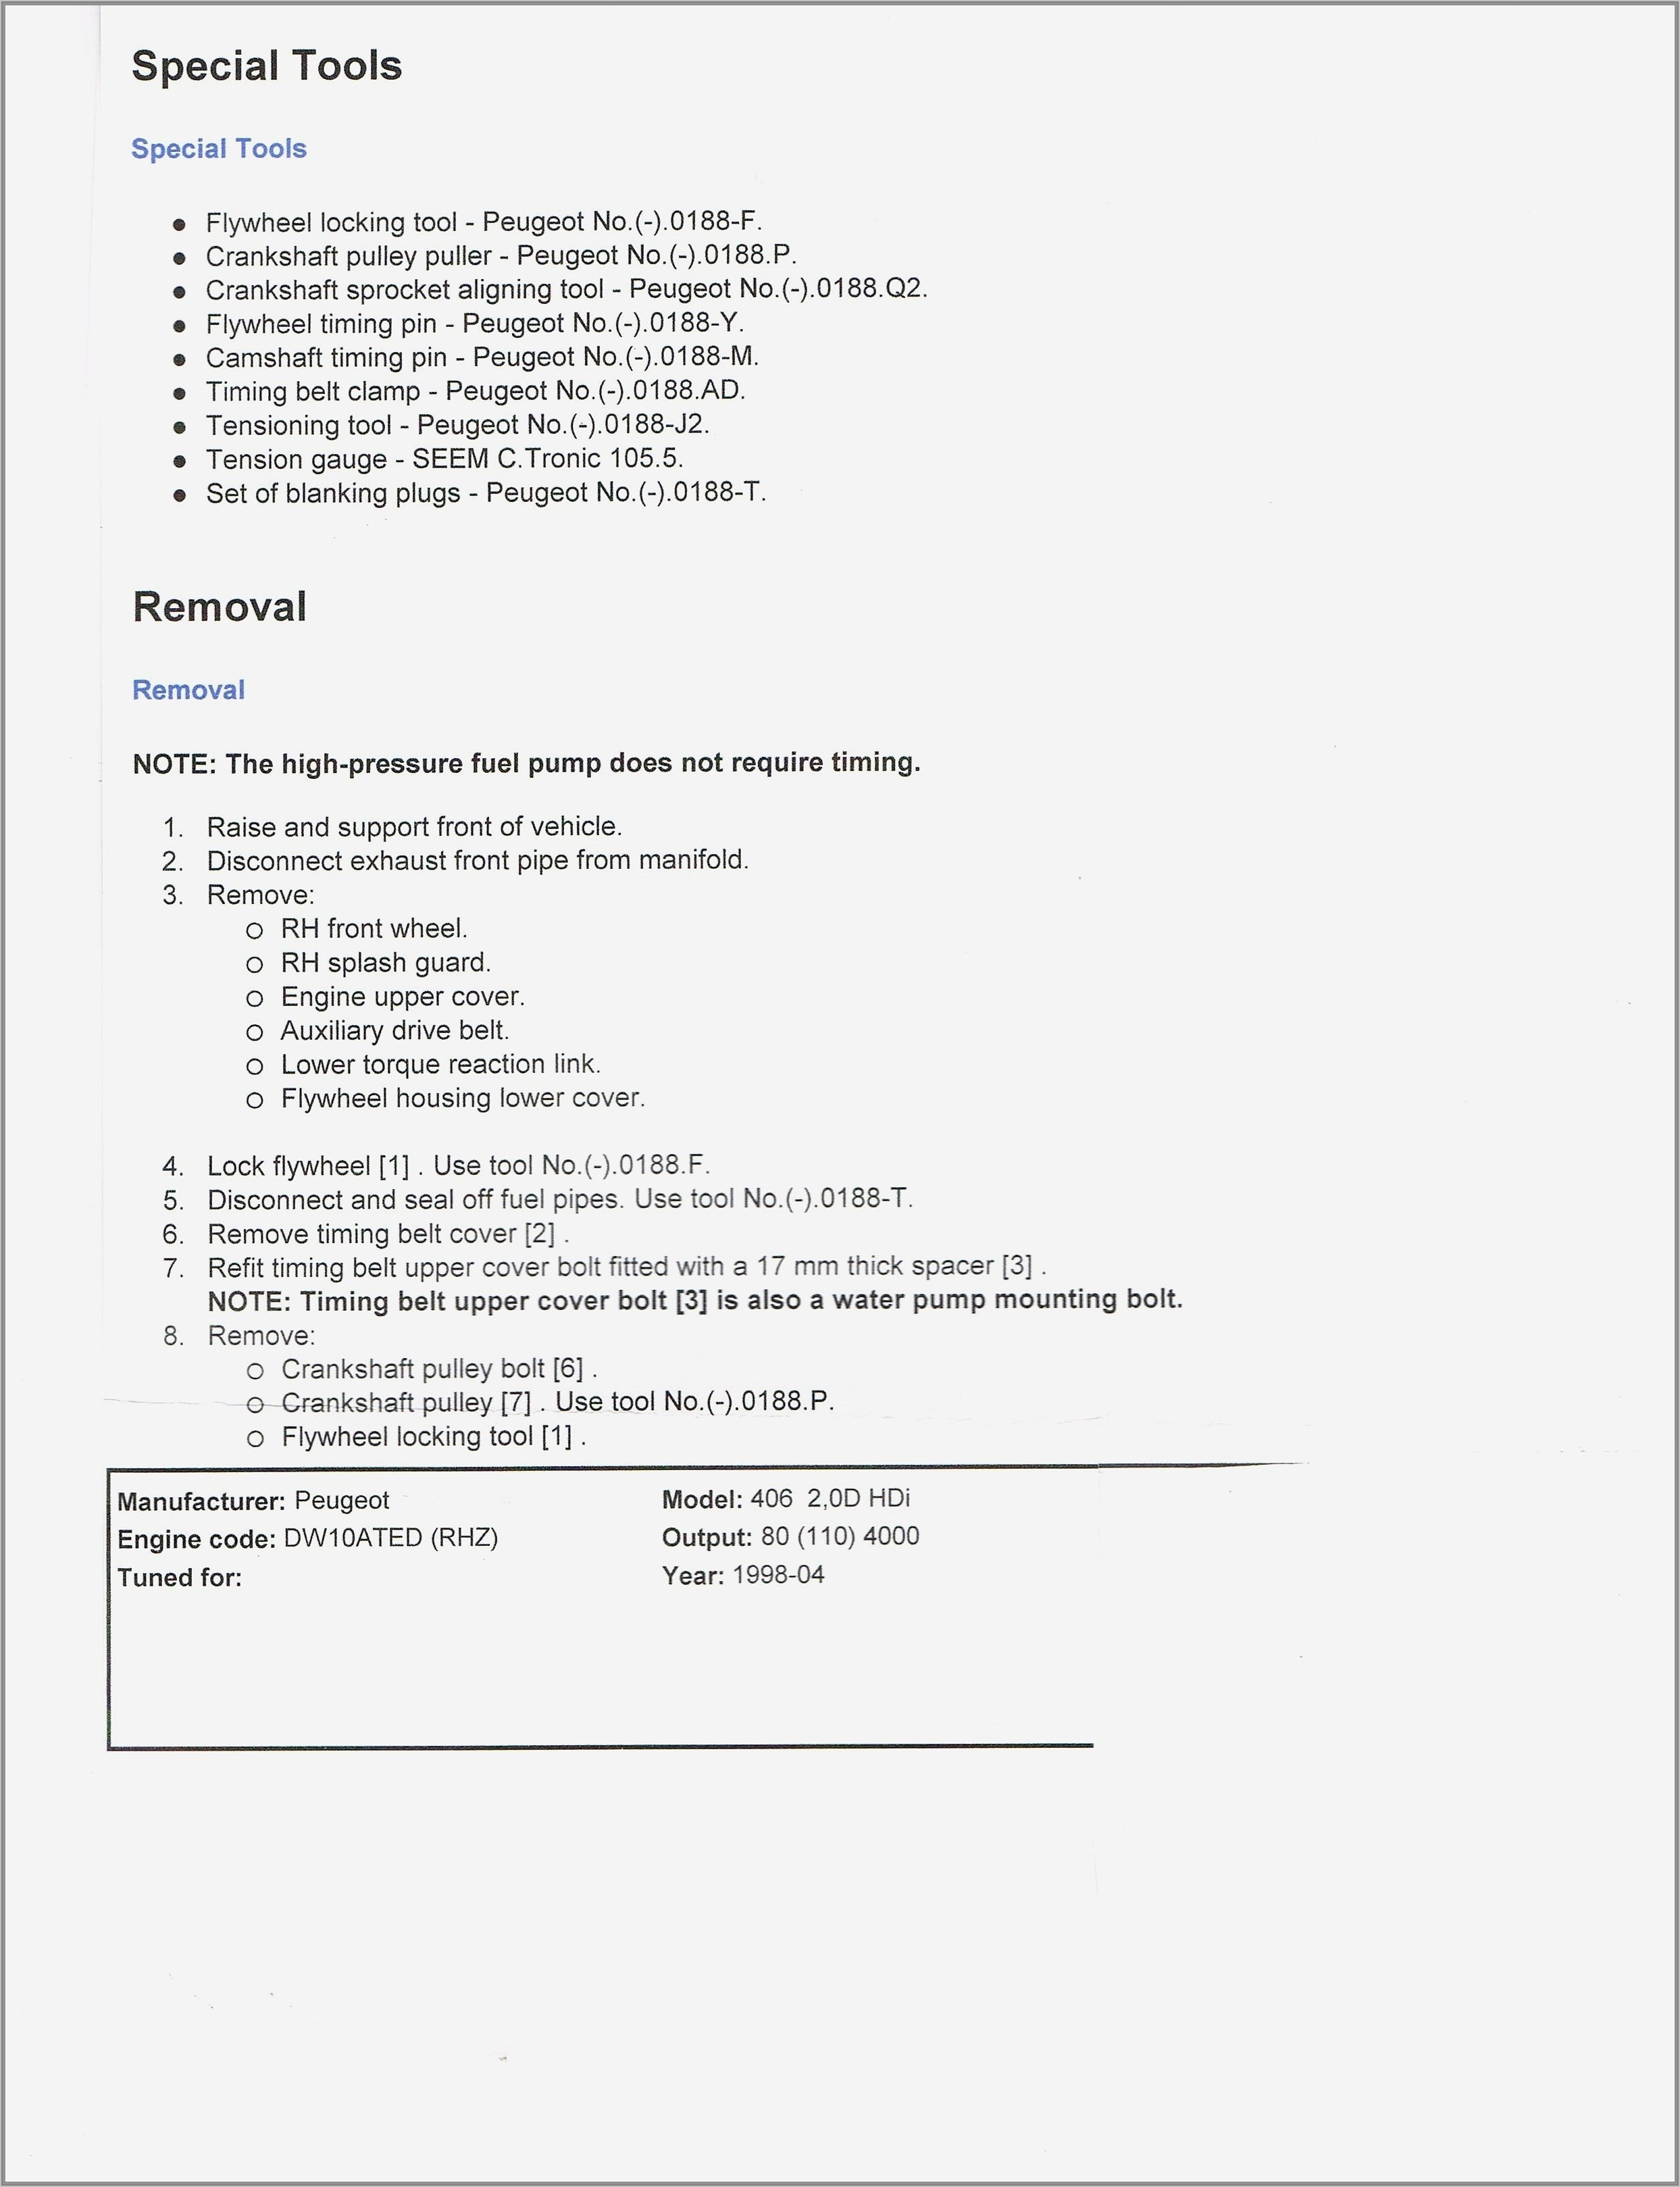 Resume Wizard Word 2007